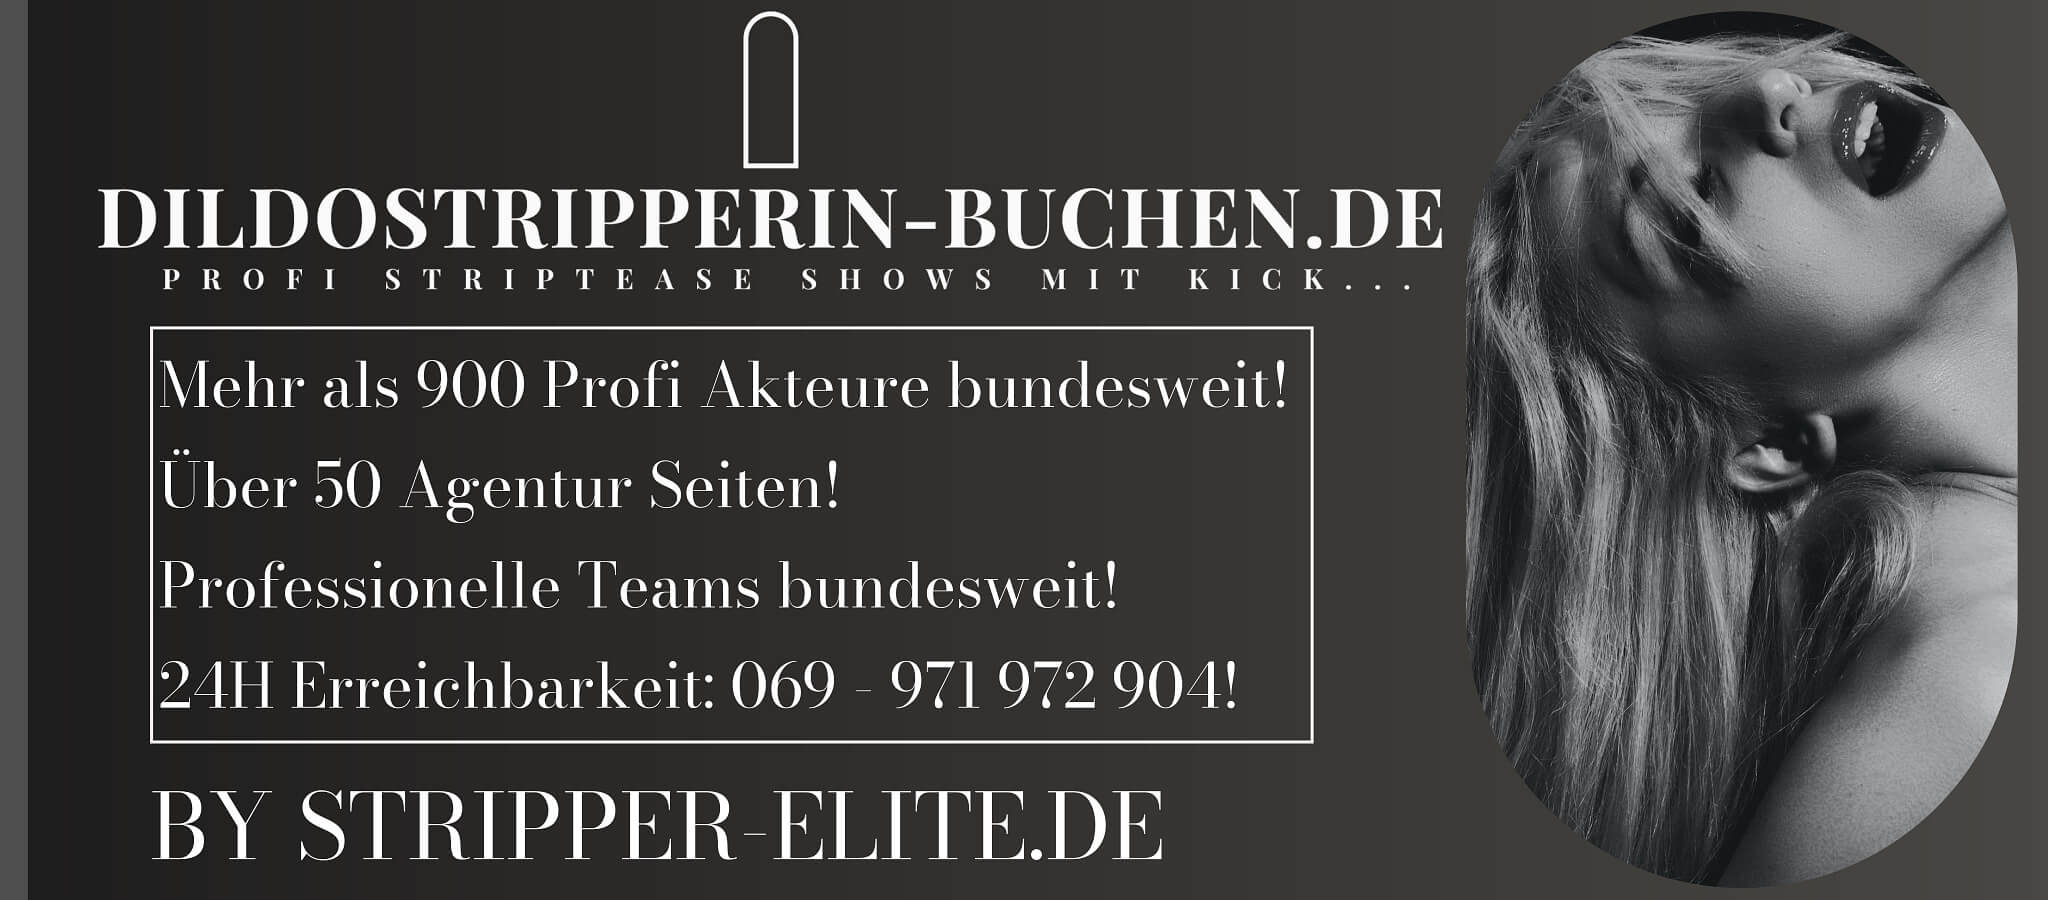 Dildostripperin-buchen.de-by Stripper-Elite.de